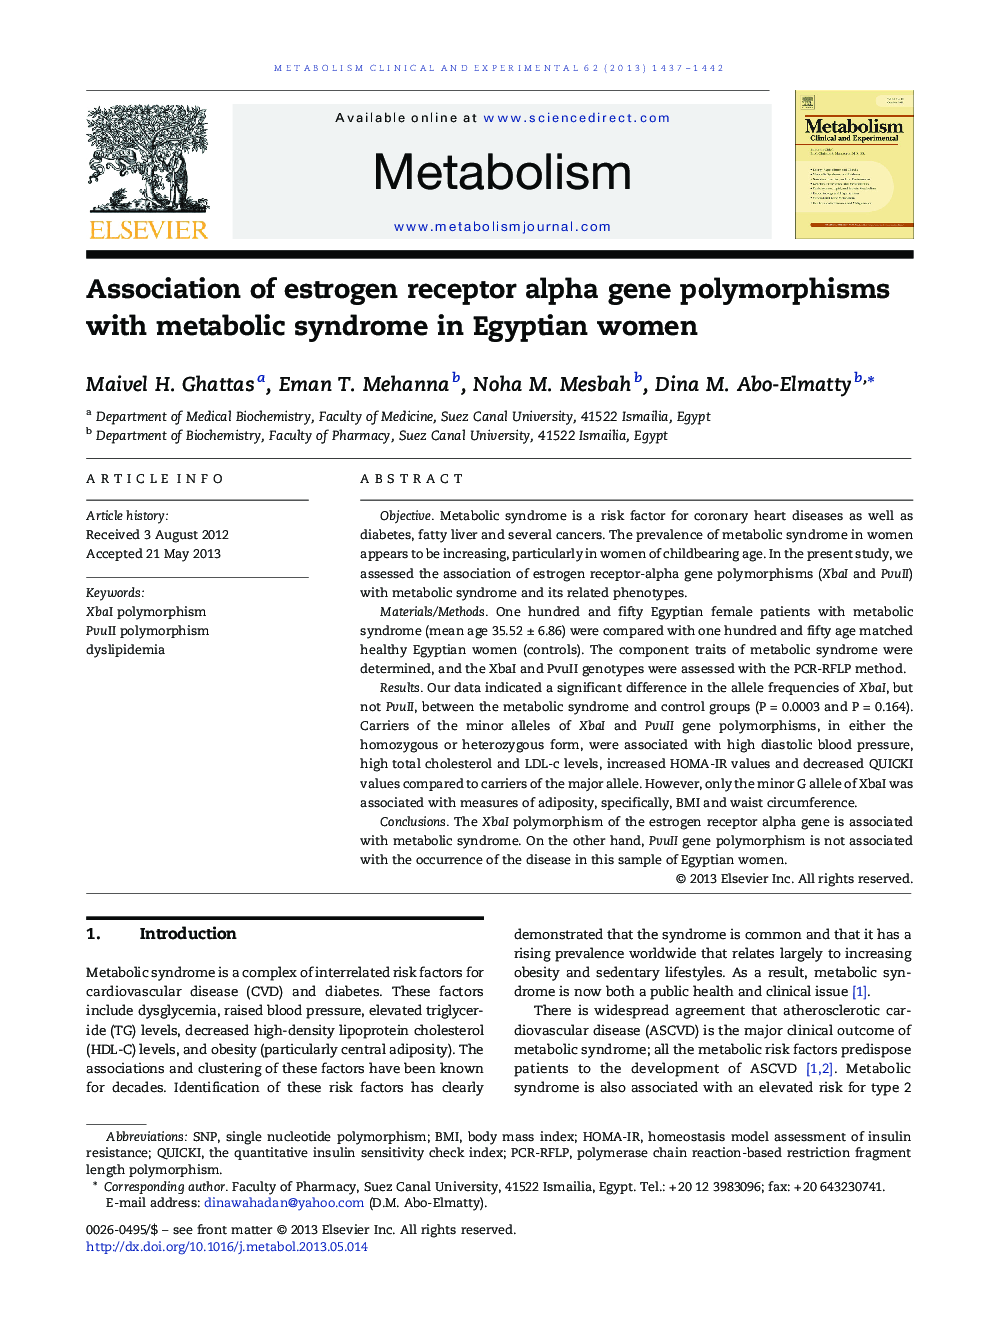 Association of estrogen receptor alpha gene polymorphisms with metabolic syndrome in Egyptian women